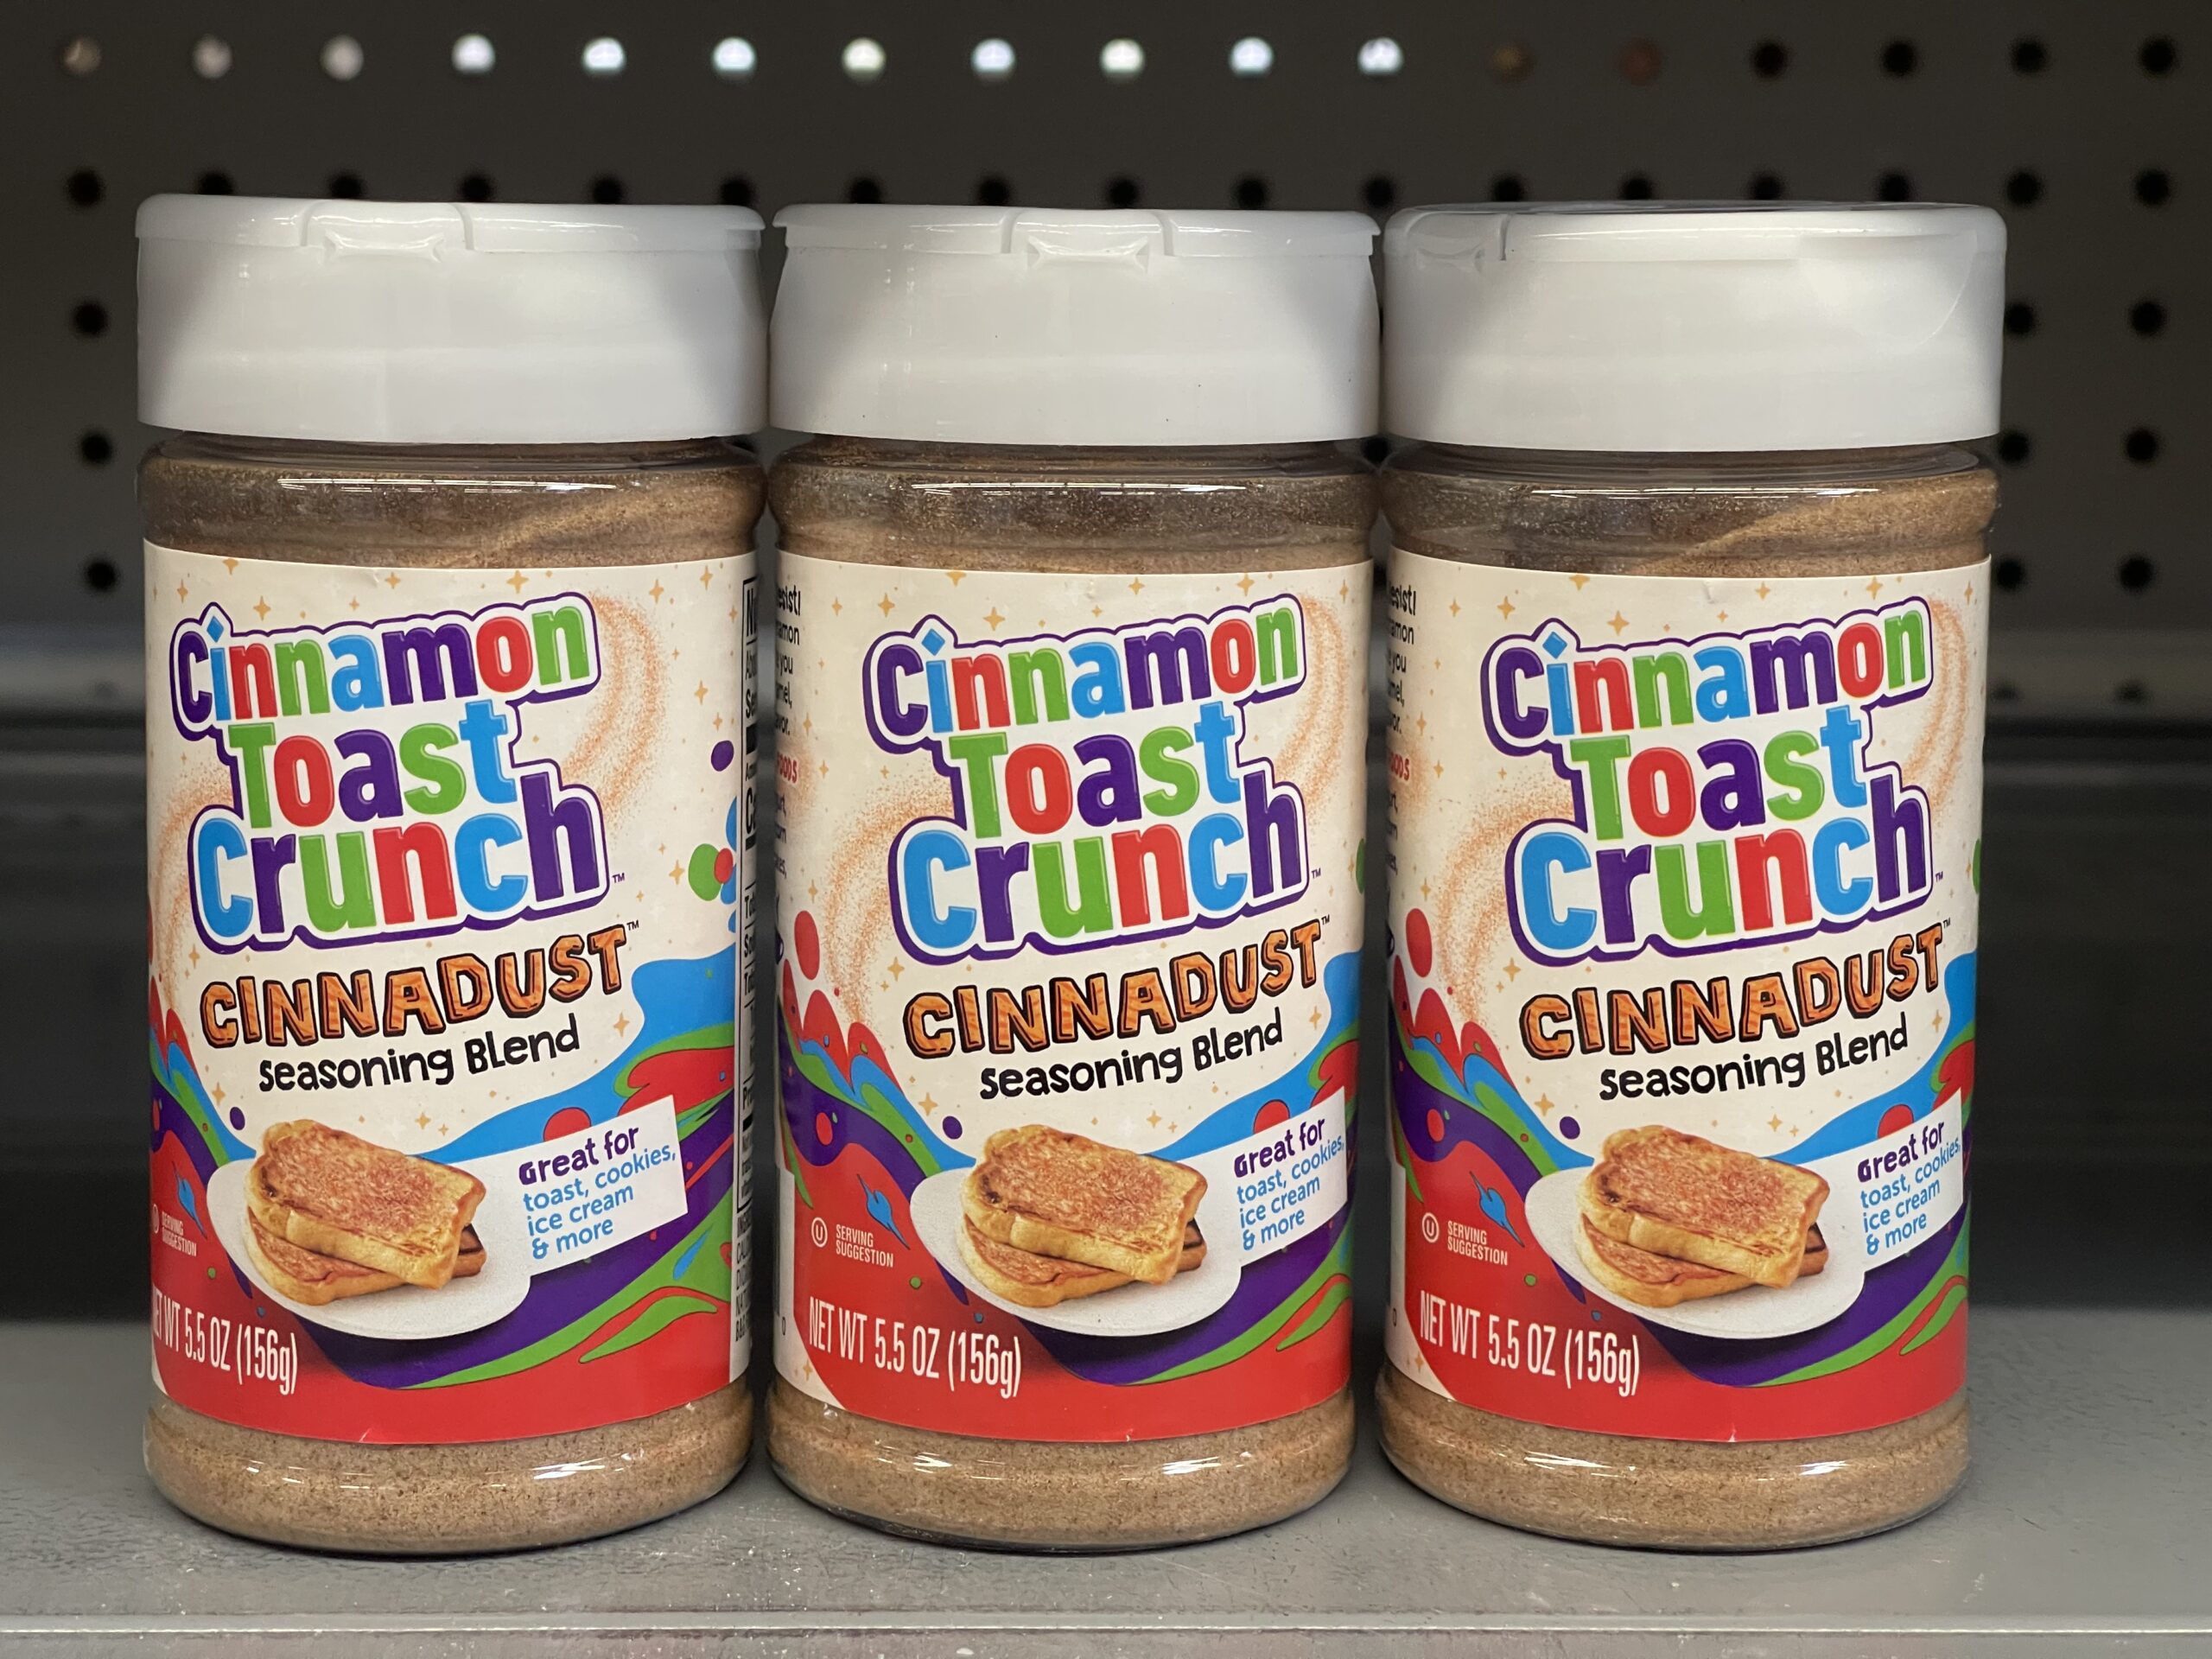 Cinnamon Toast Crunch Seasoning Blend, Cinnadust - 5.5 oz